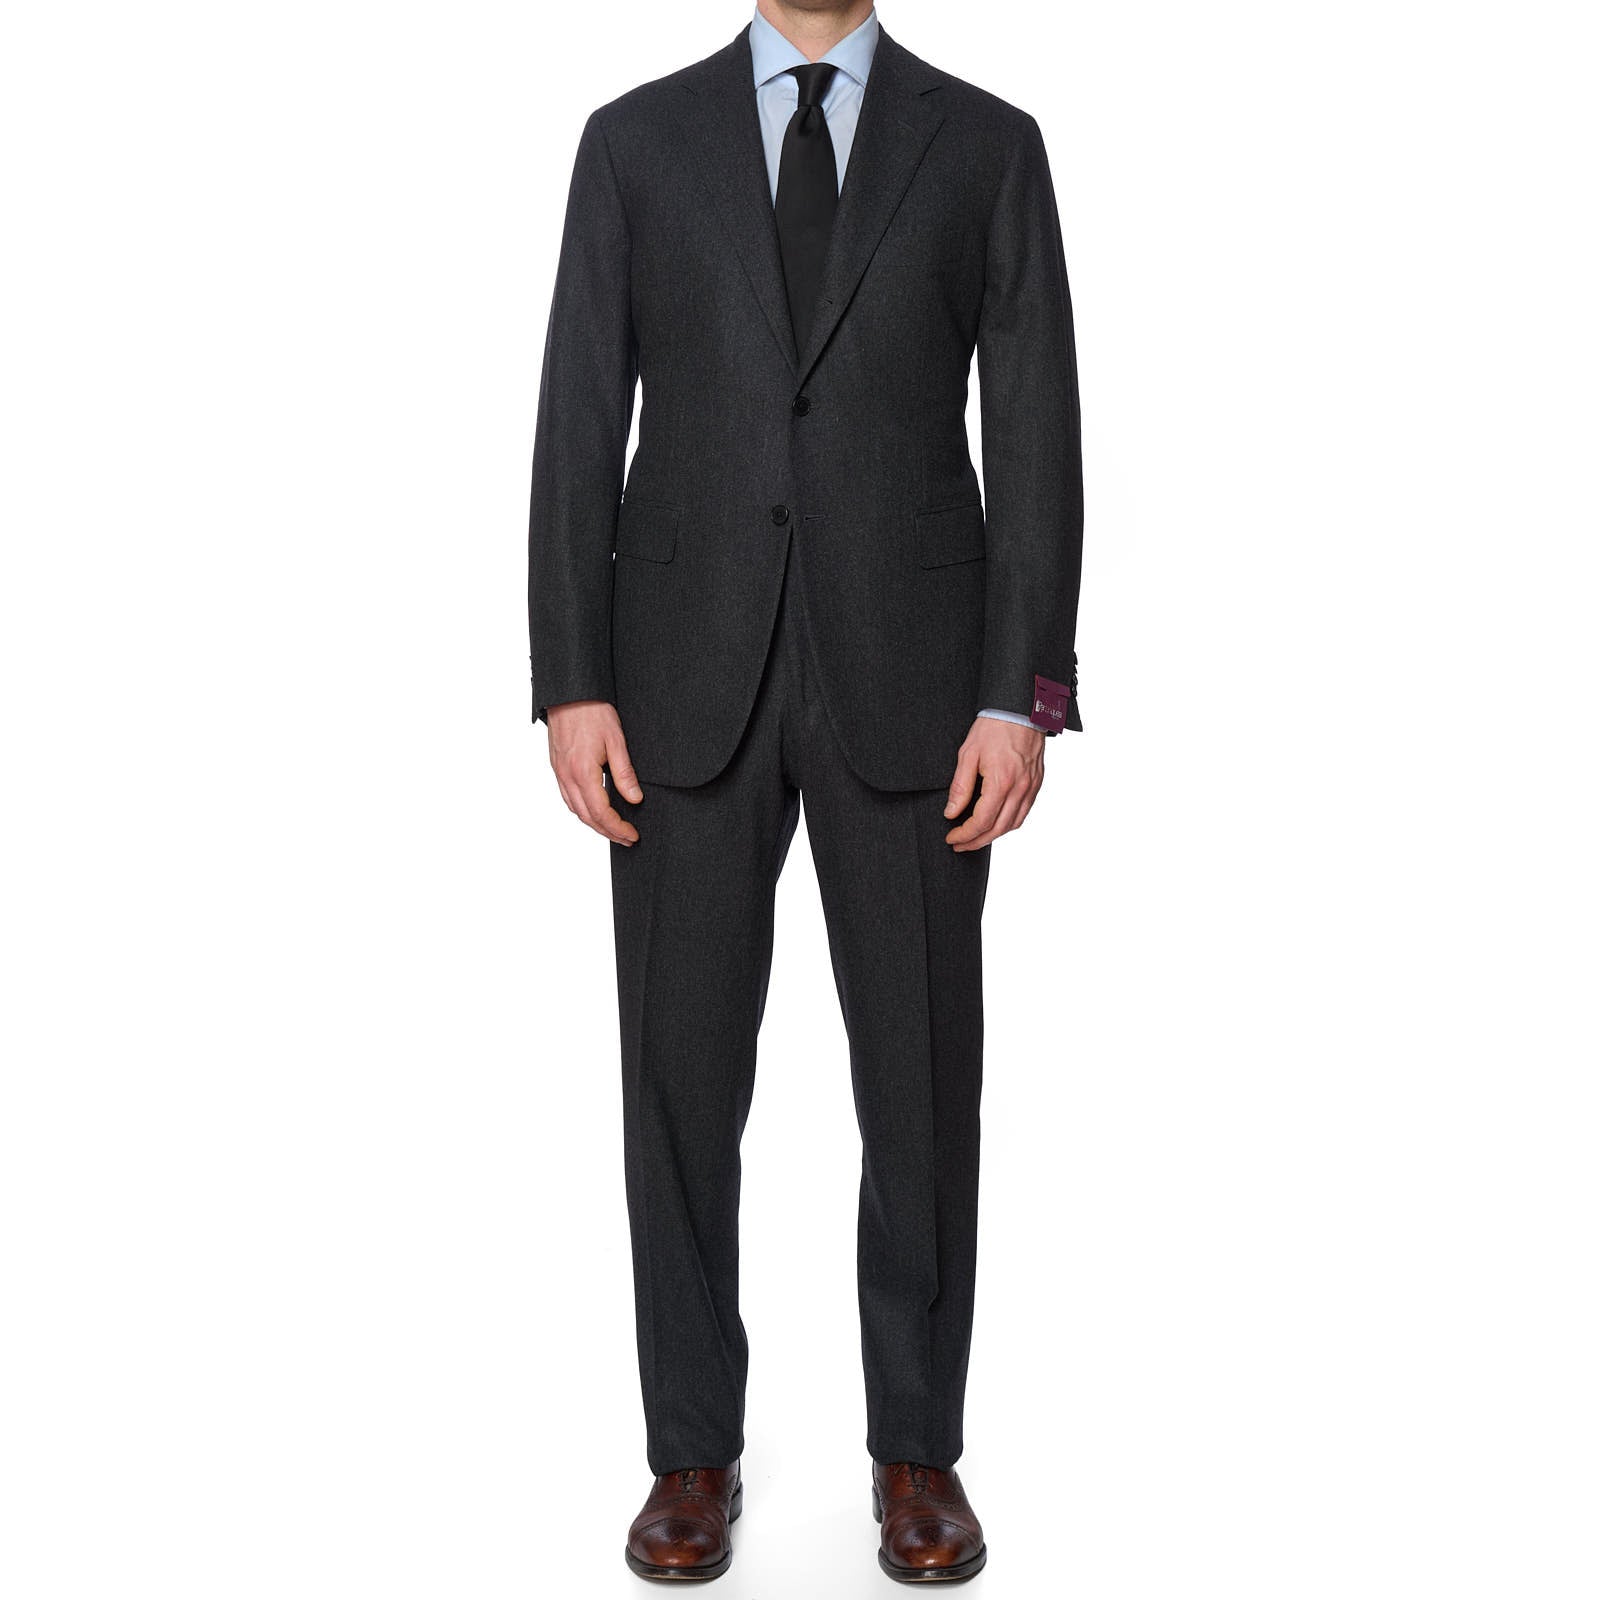 SARTORIA PARTENOPEA Charcoal Flannel S. 100's Handmade Suit EU 54 NEW US 42 44